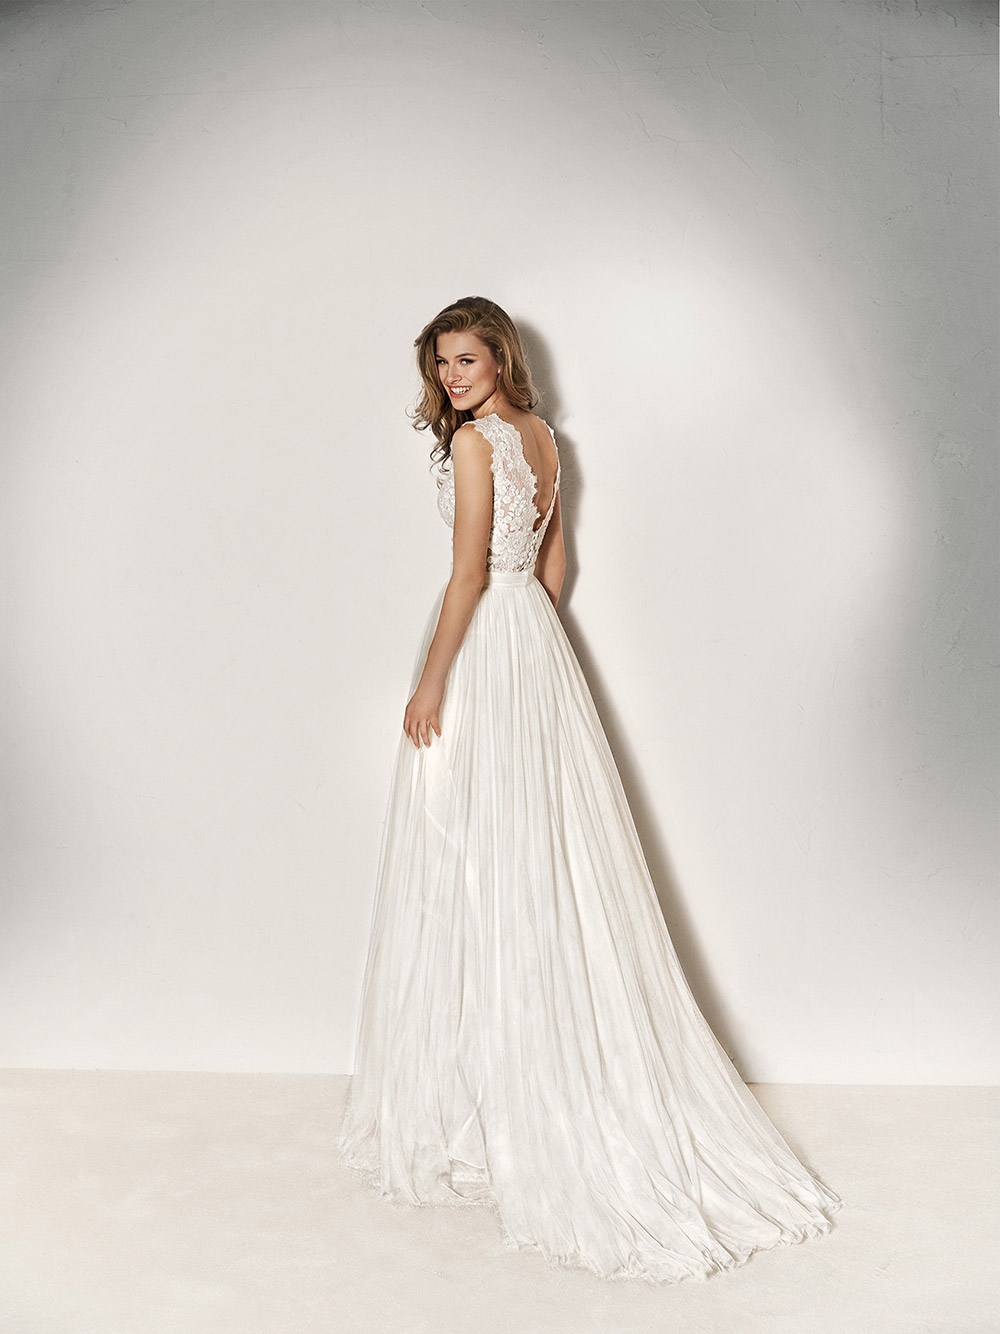 Xinia - Pronovias 2018 Bridal Collection. www.theweddingnotebook.com